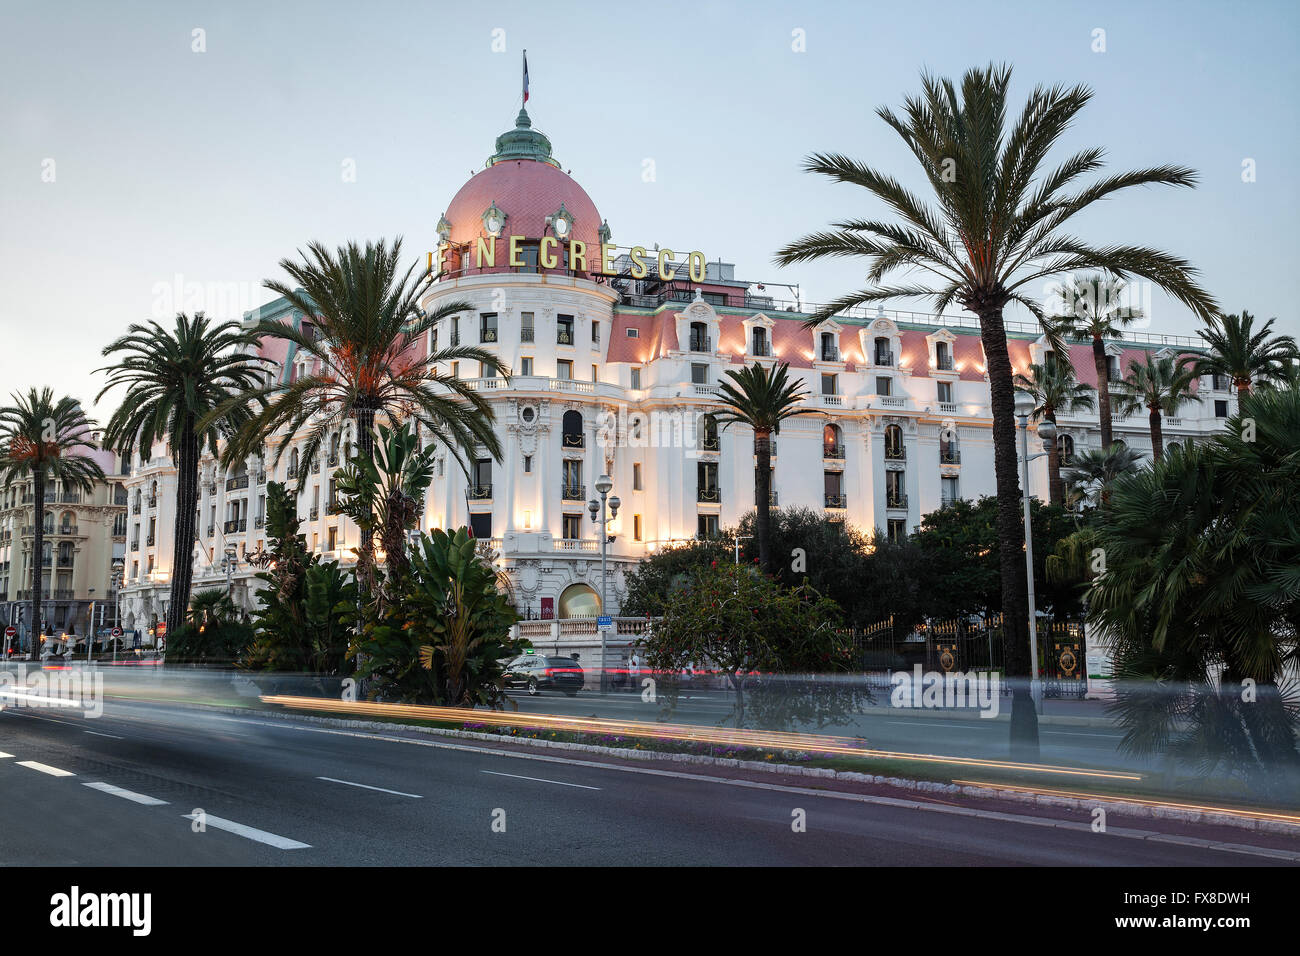 Negresco Hotel, Nice, Cote D'Azur, France - Evening landscape Stock Photo